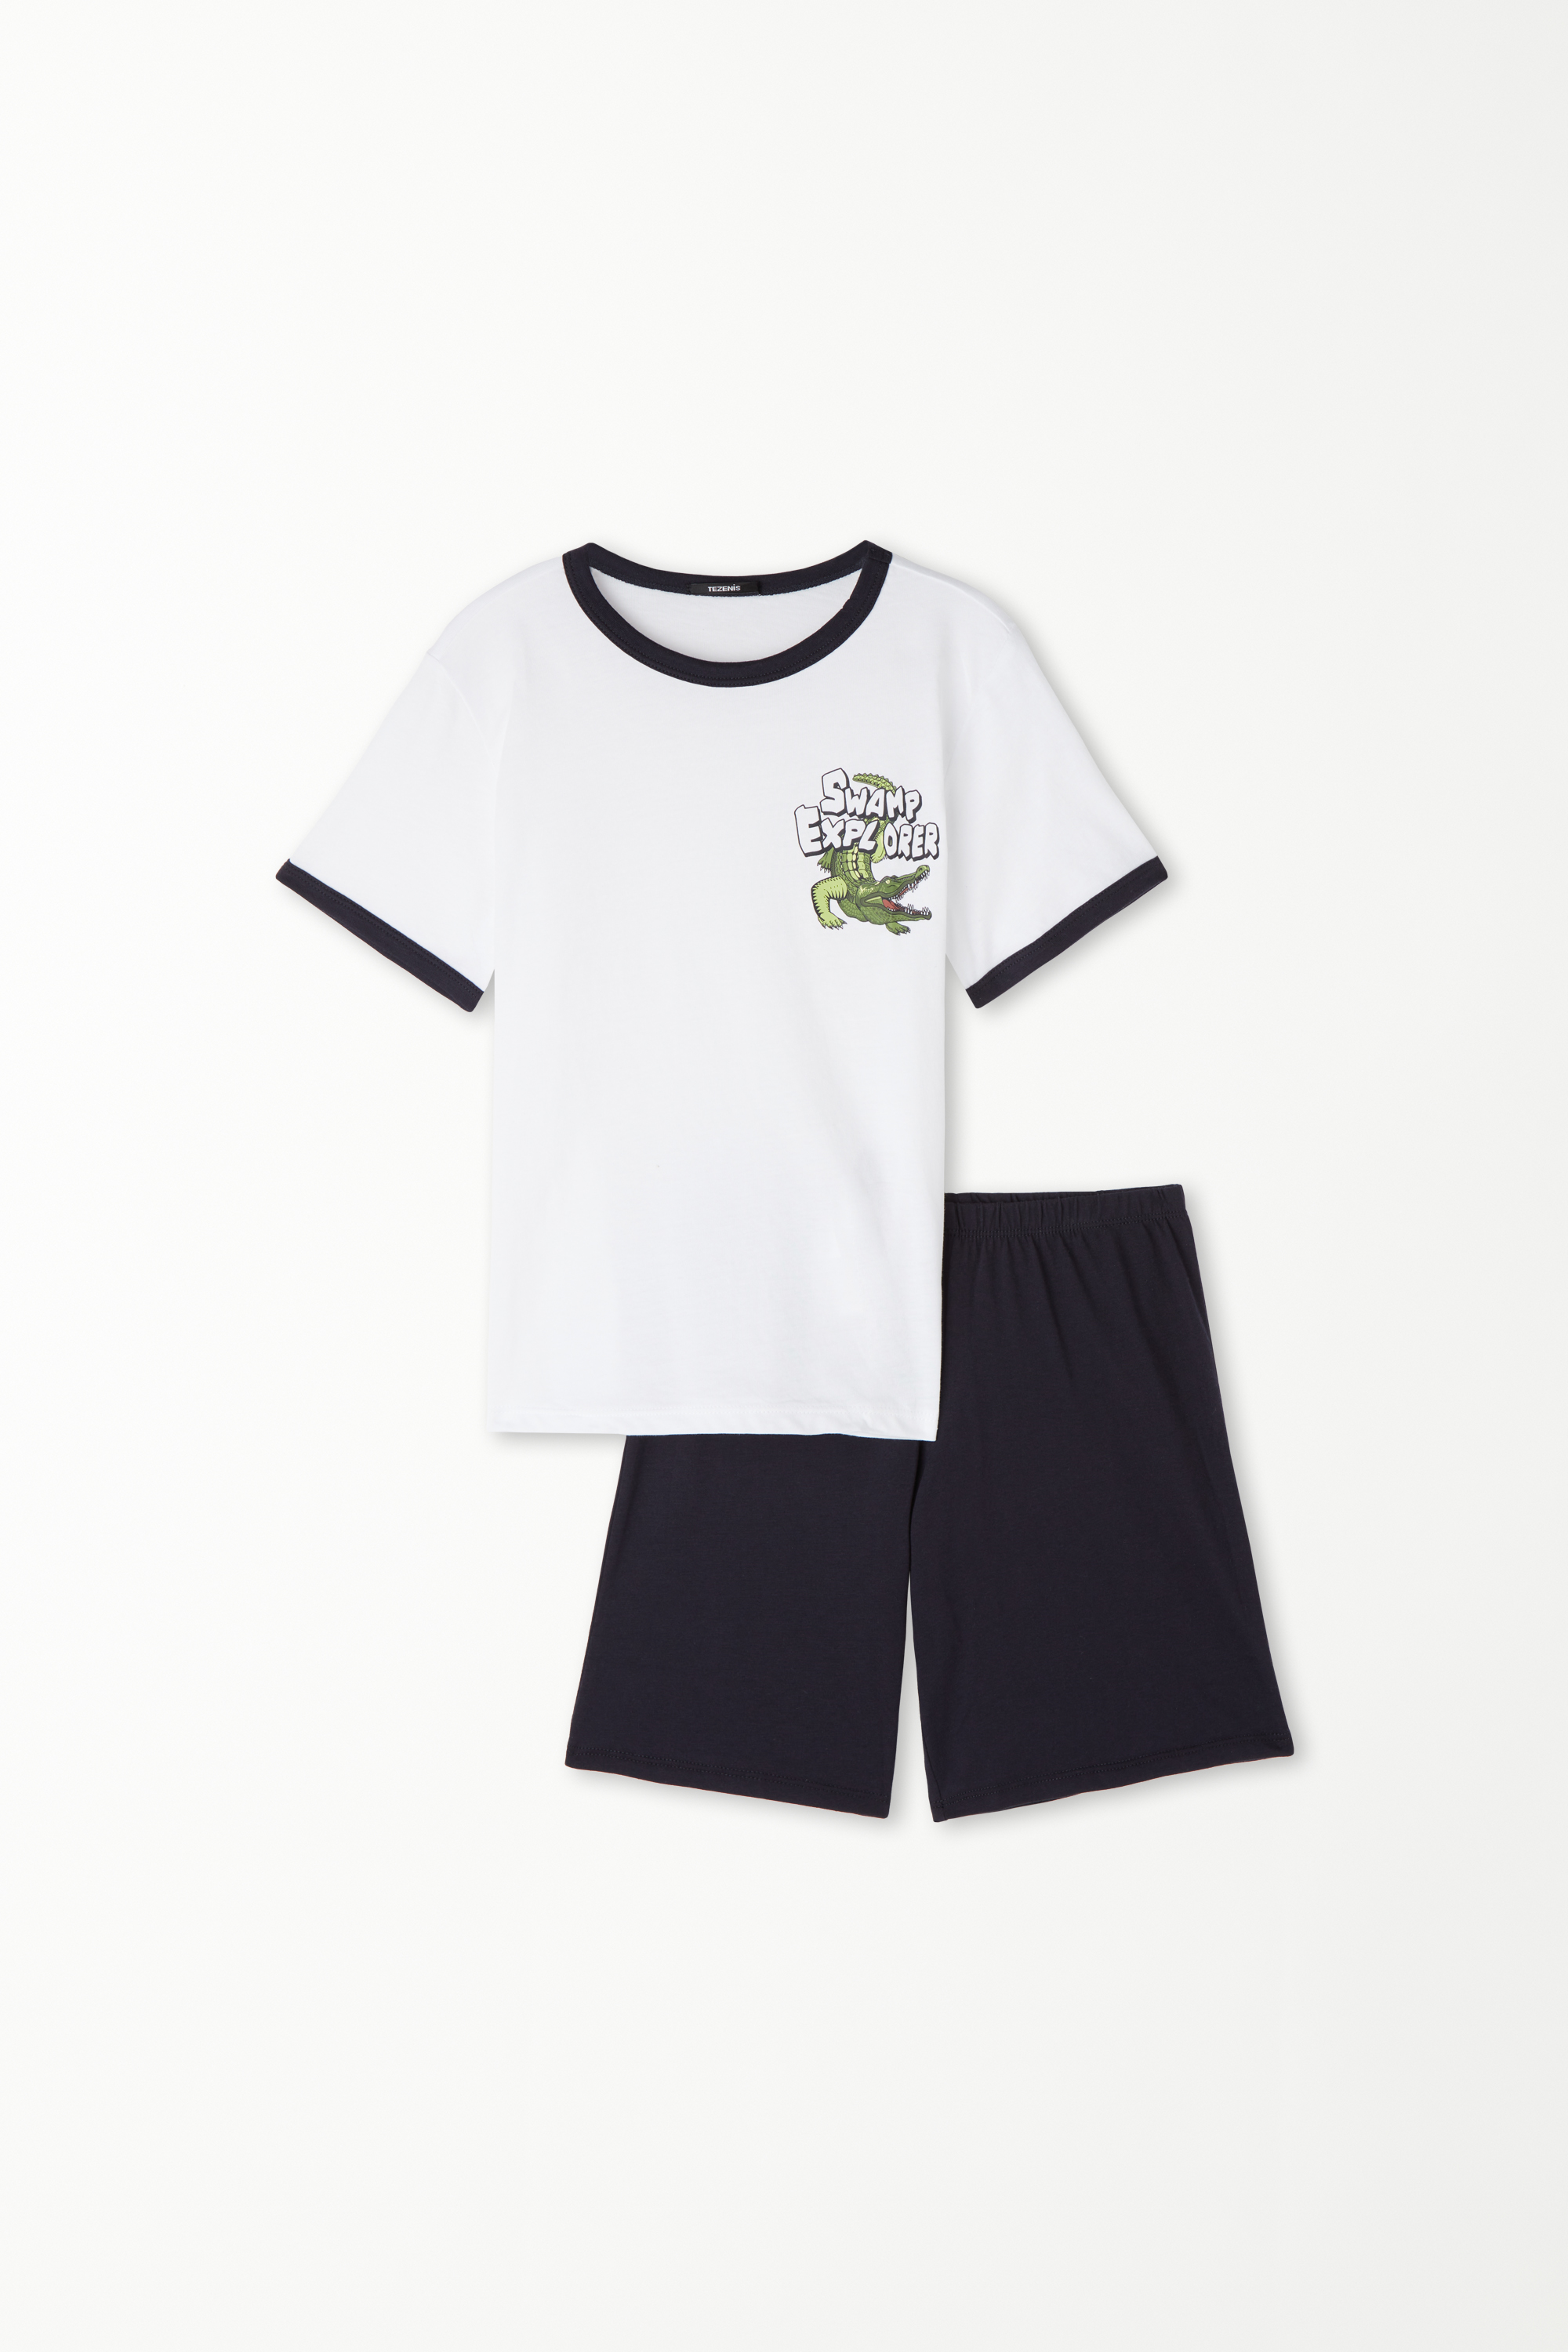 Boys’ Printed Cotton T-Shirt and Shorts Set